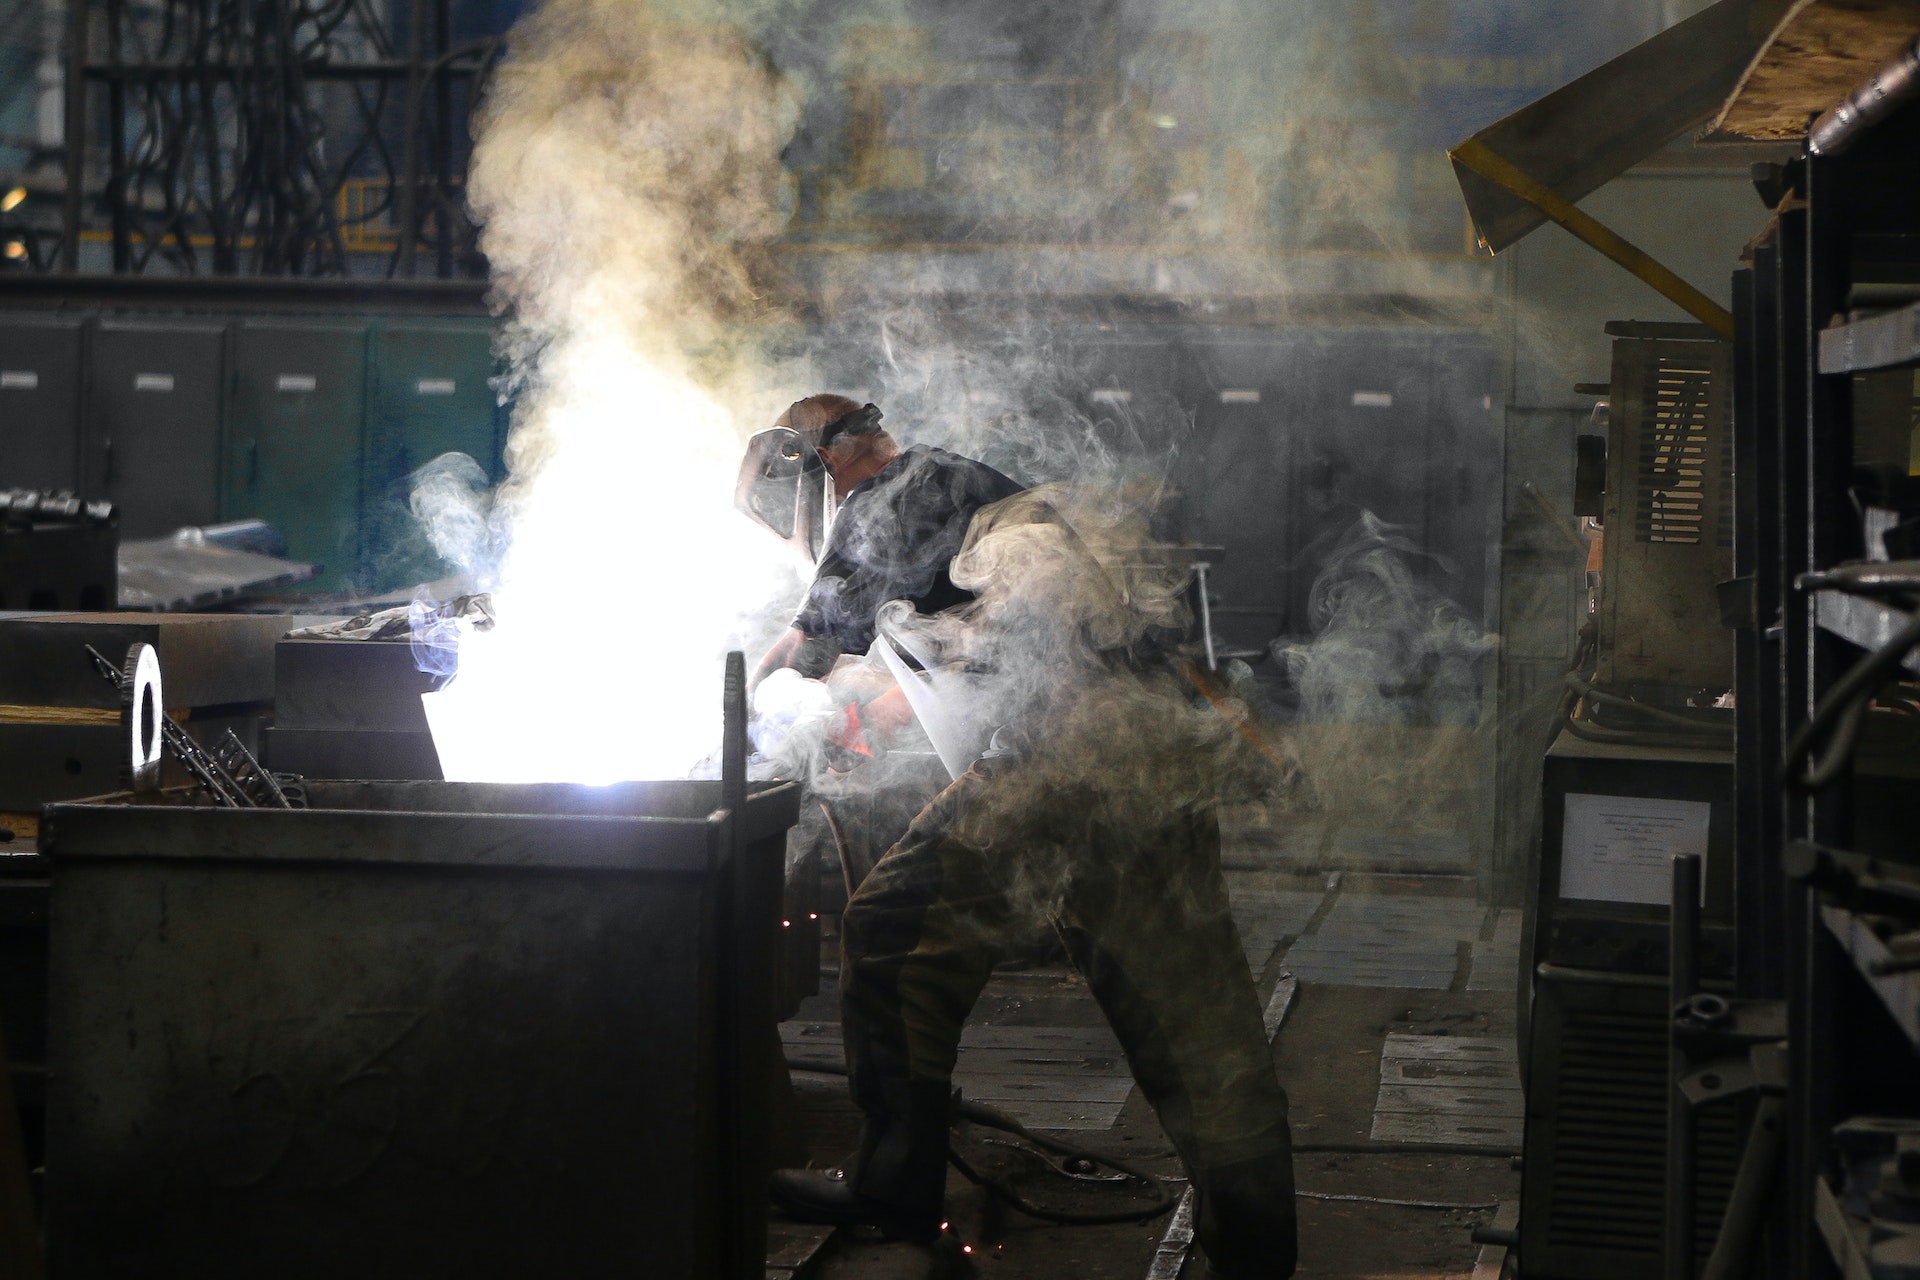 A man wearing welding mask covered in welding smoke | Source: Pexels